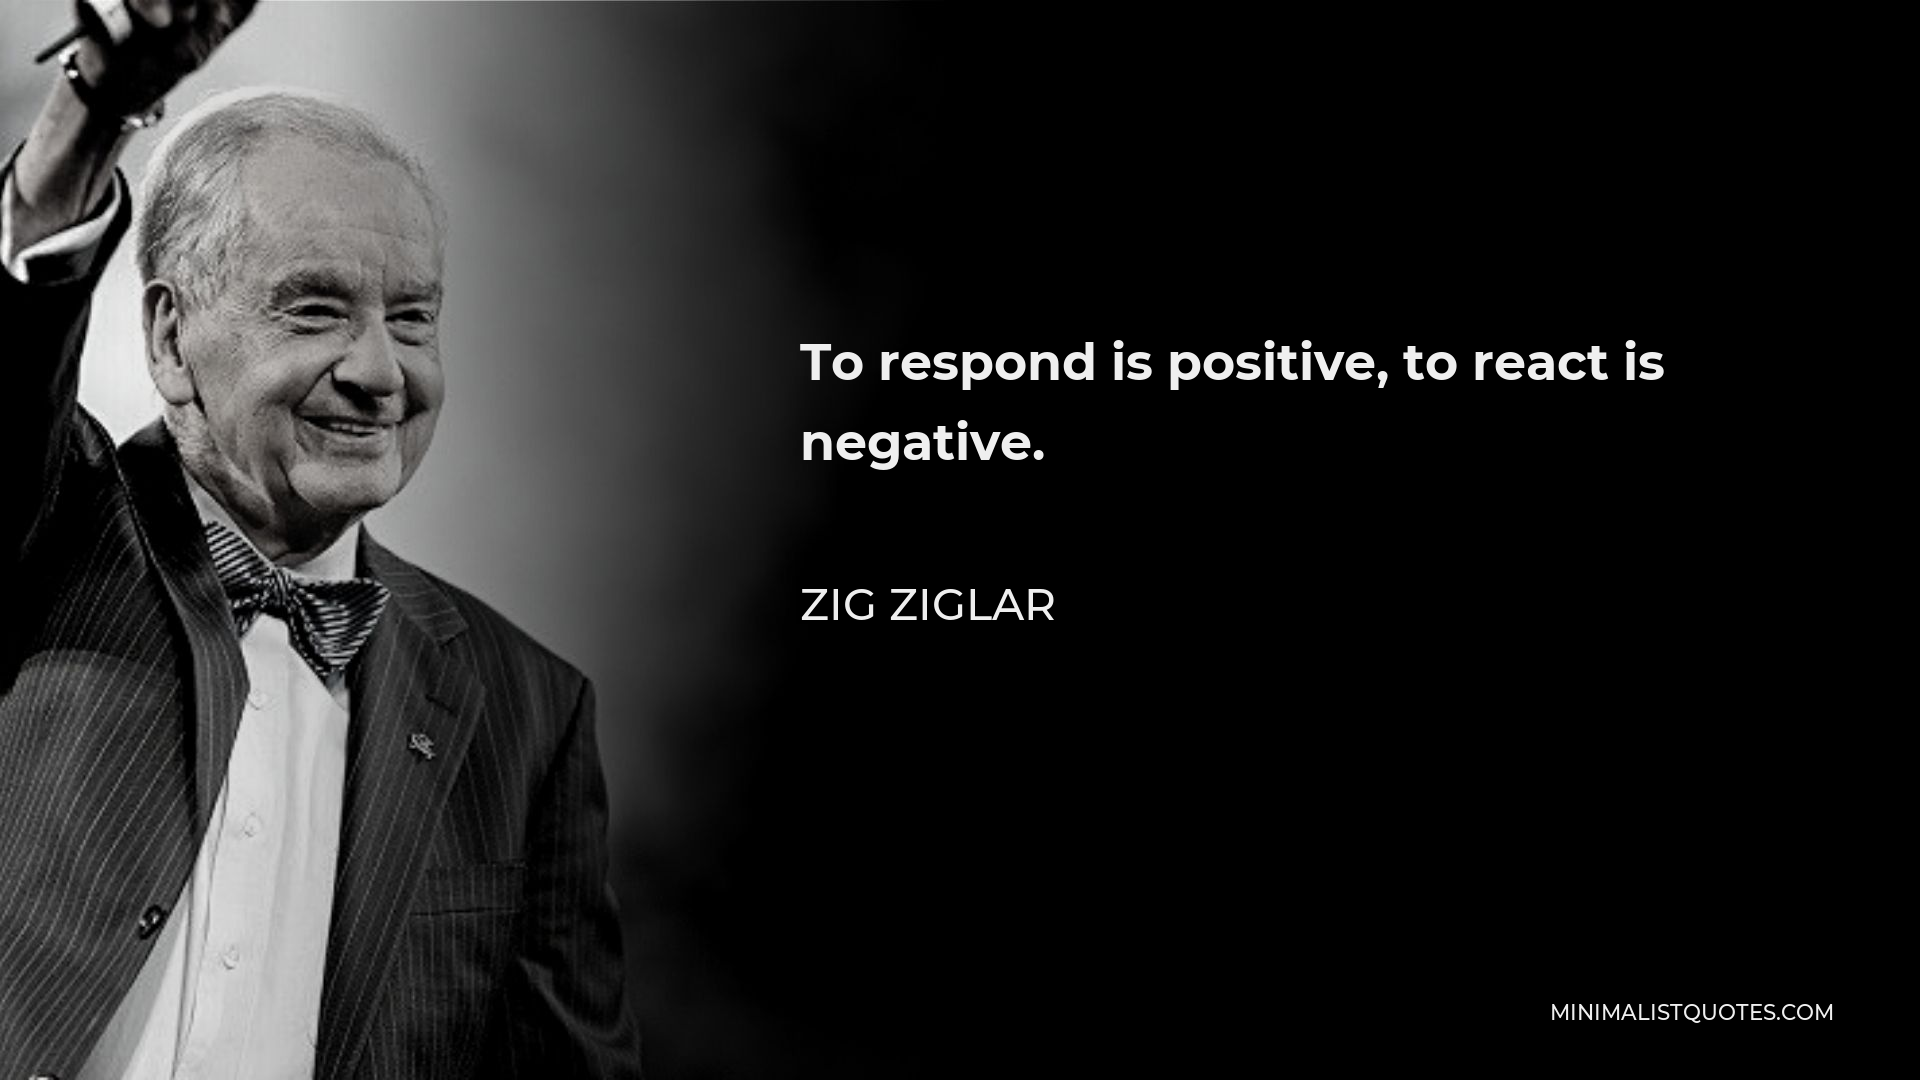 Zig Ziglar Quote - To respond is positive, to react is negative.